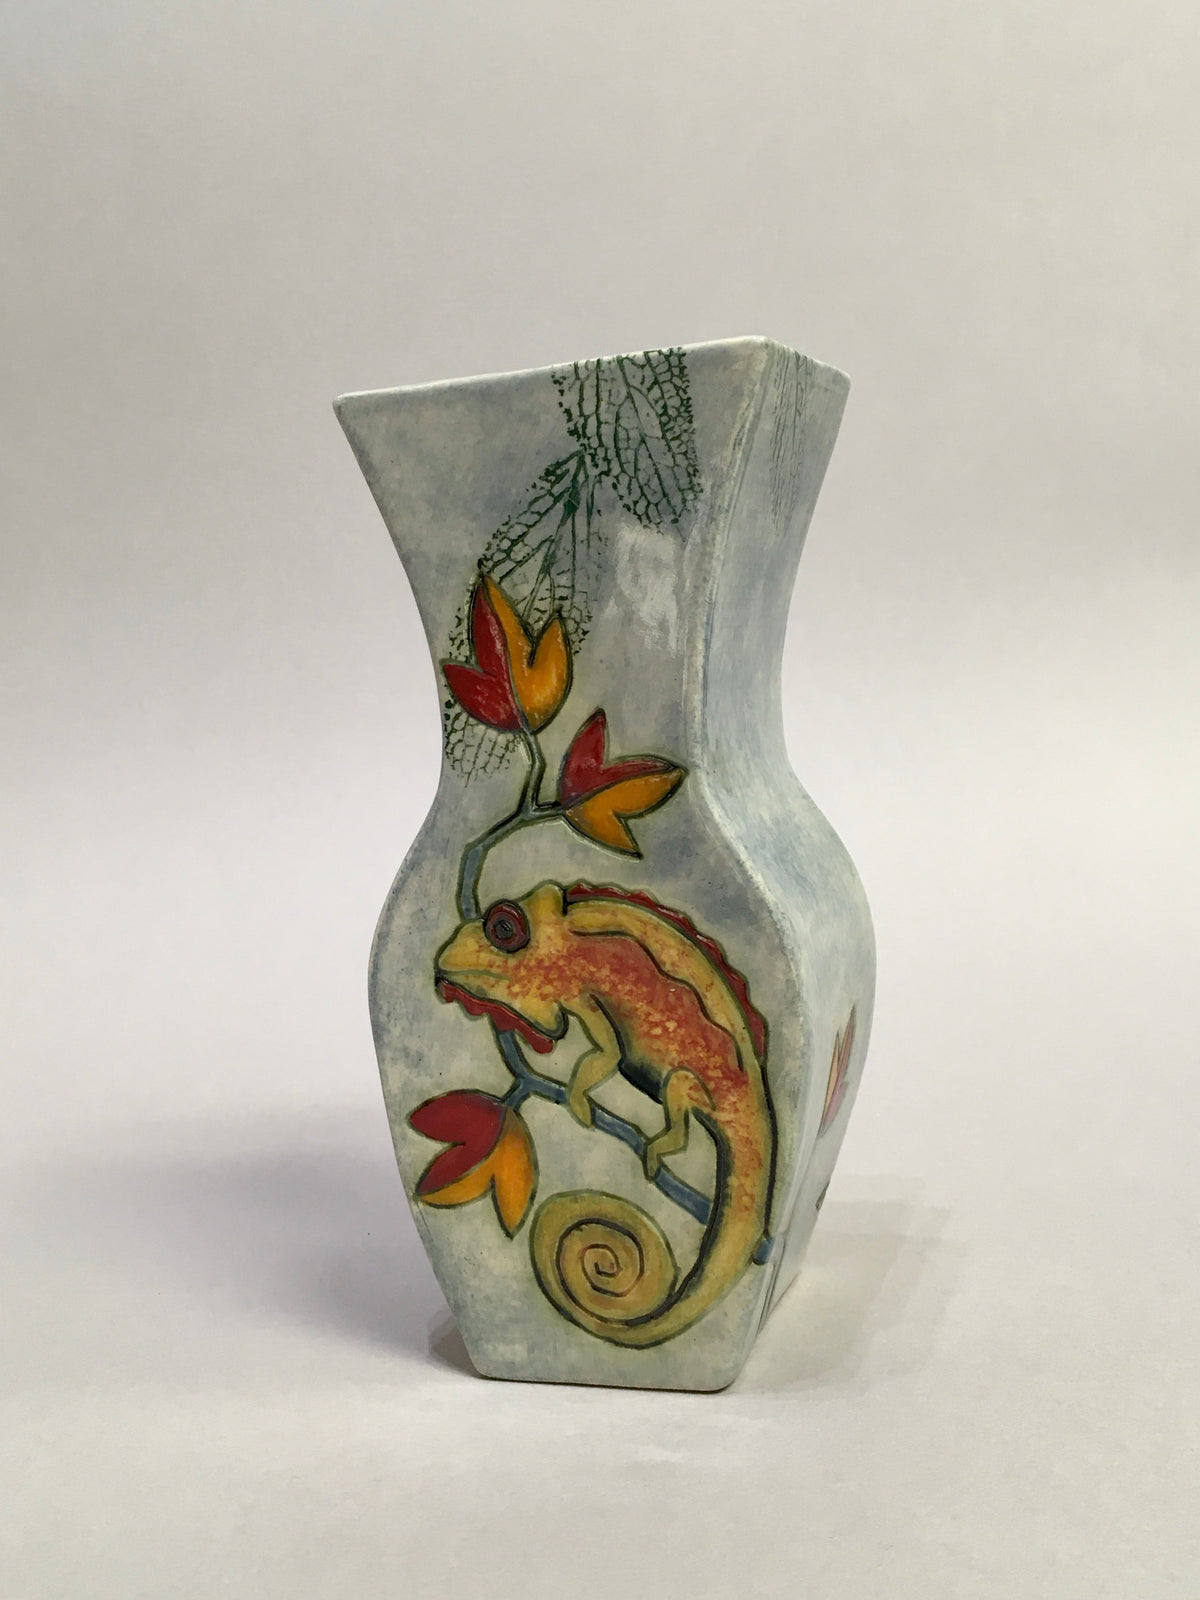 Chameleon Vase by Jeanne Jackson